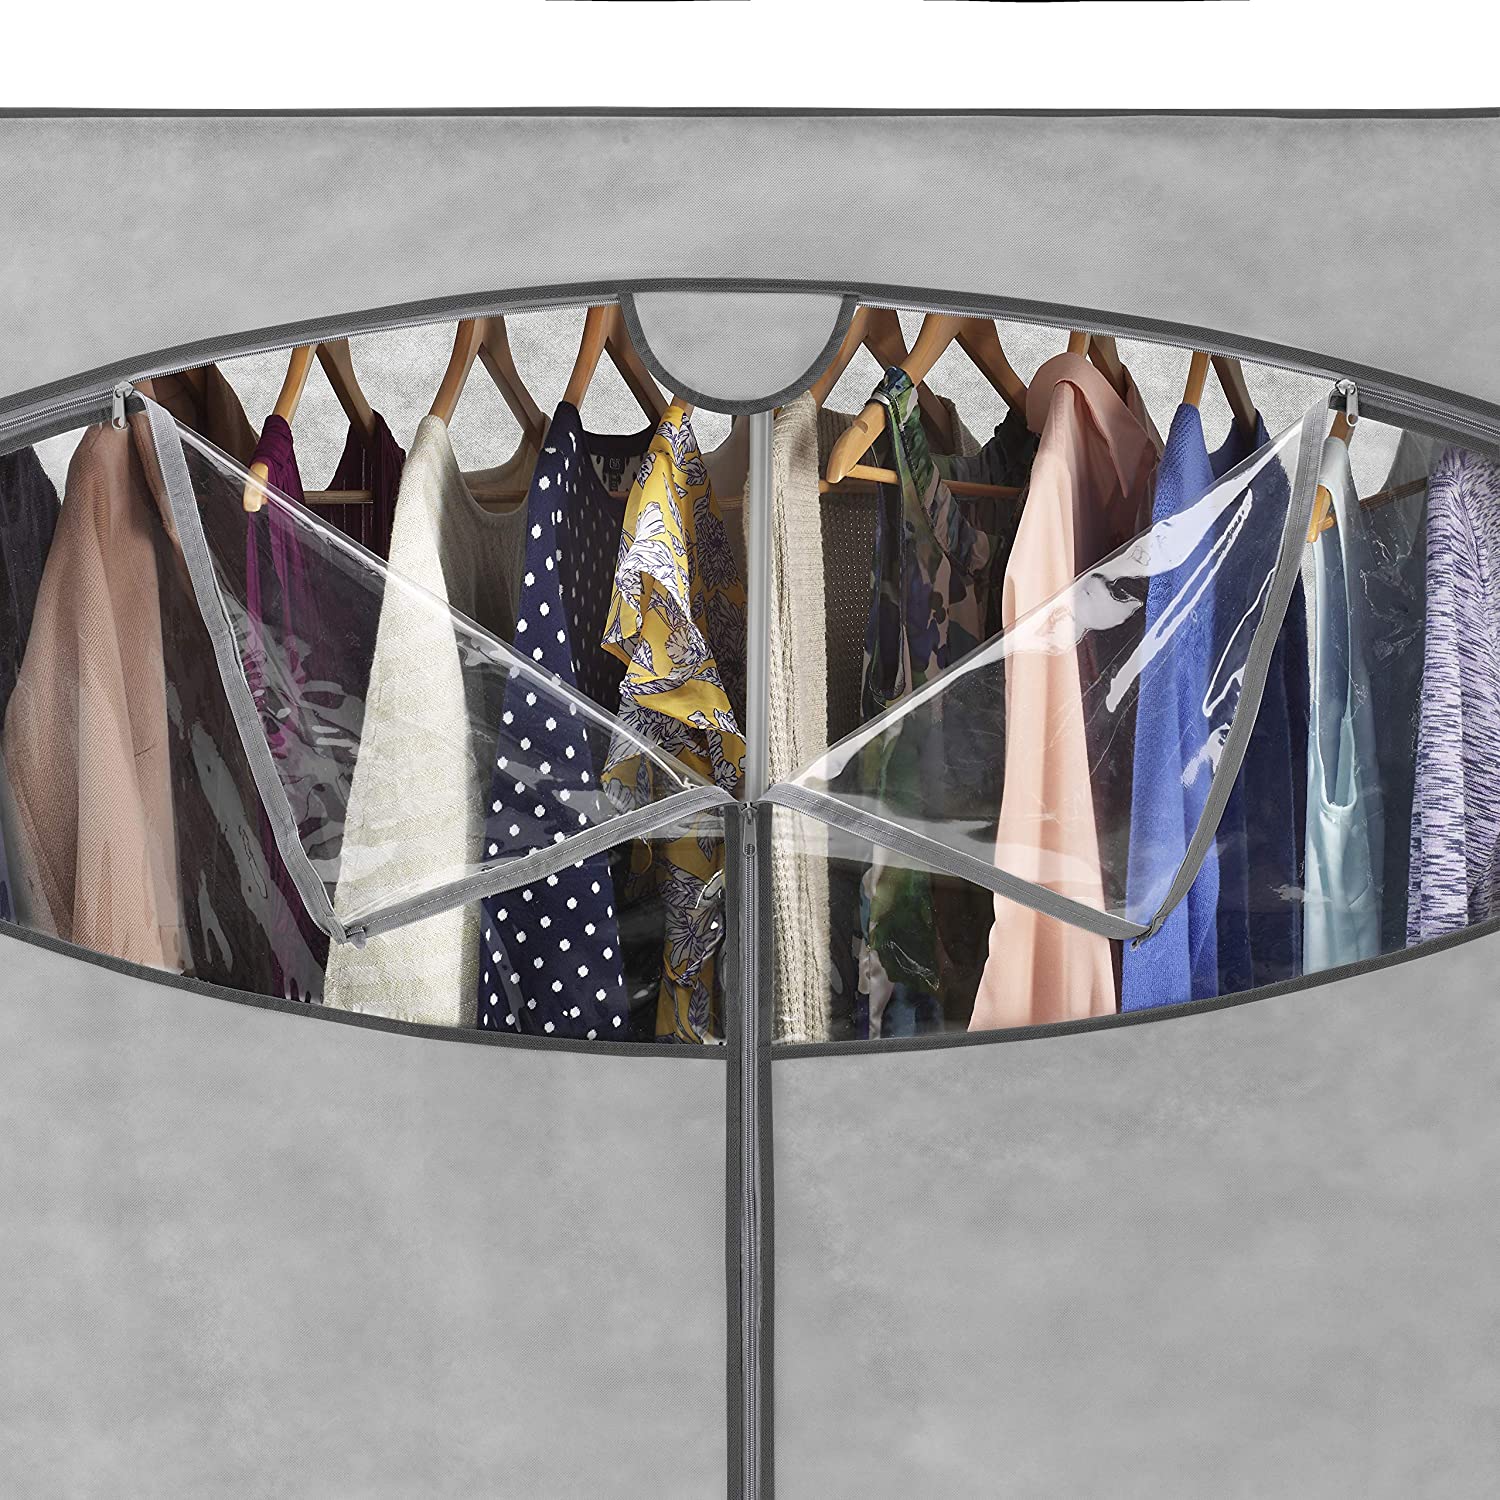 Portable Wardrobe Clothes Storage Organizer Closet with Hanging Rack